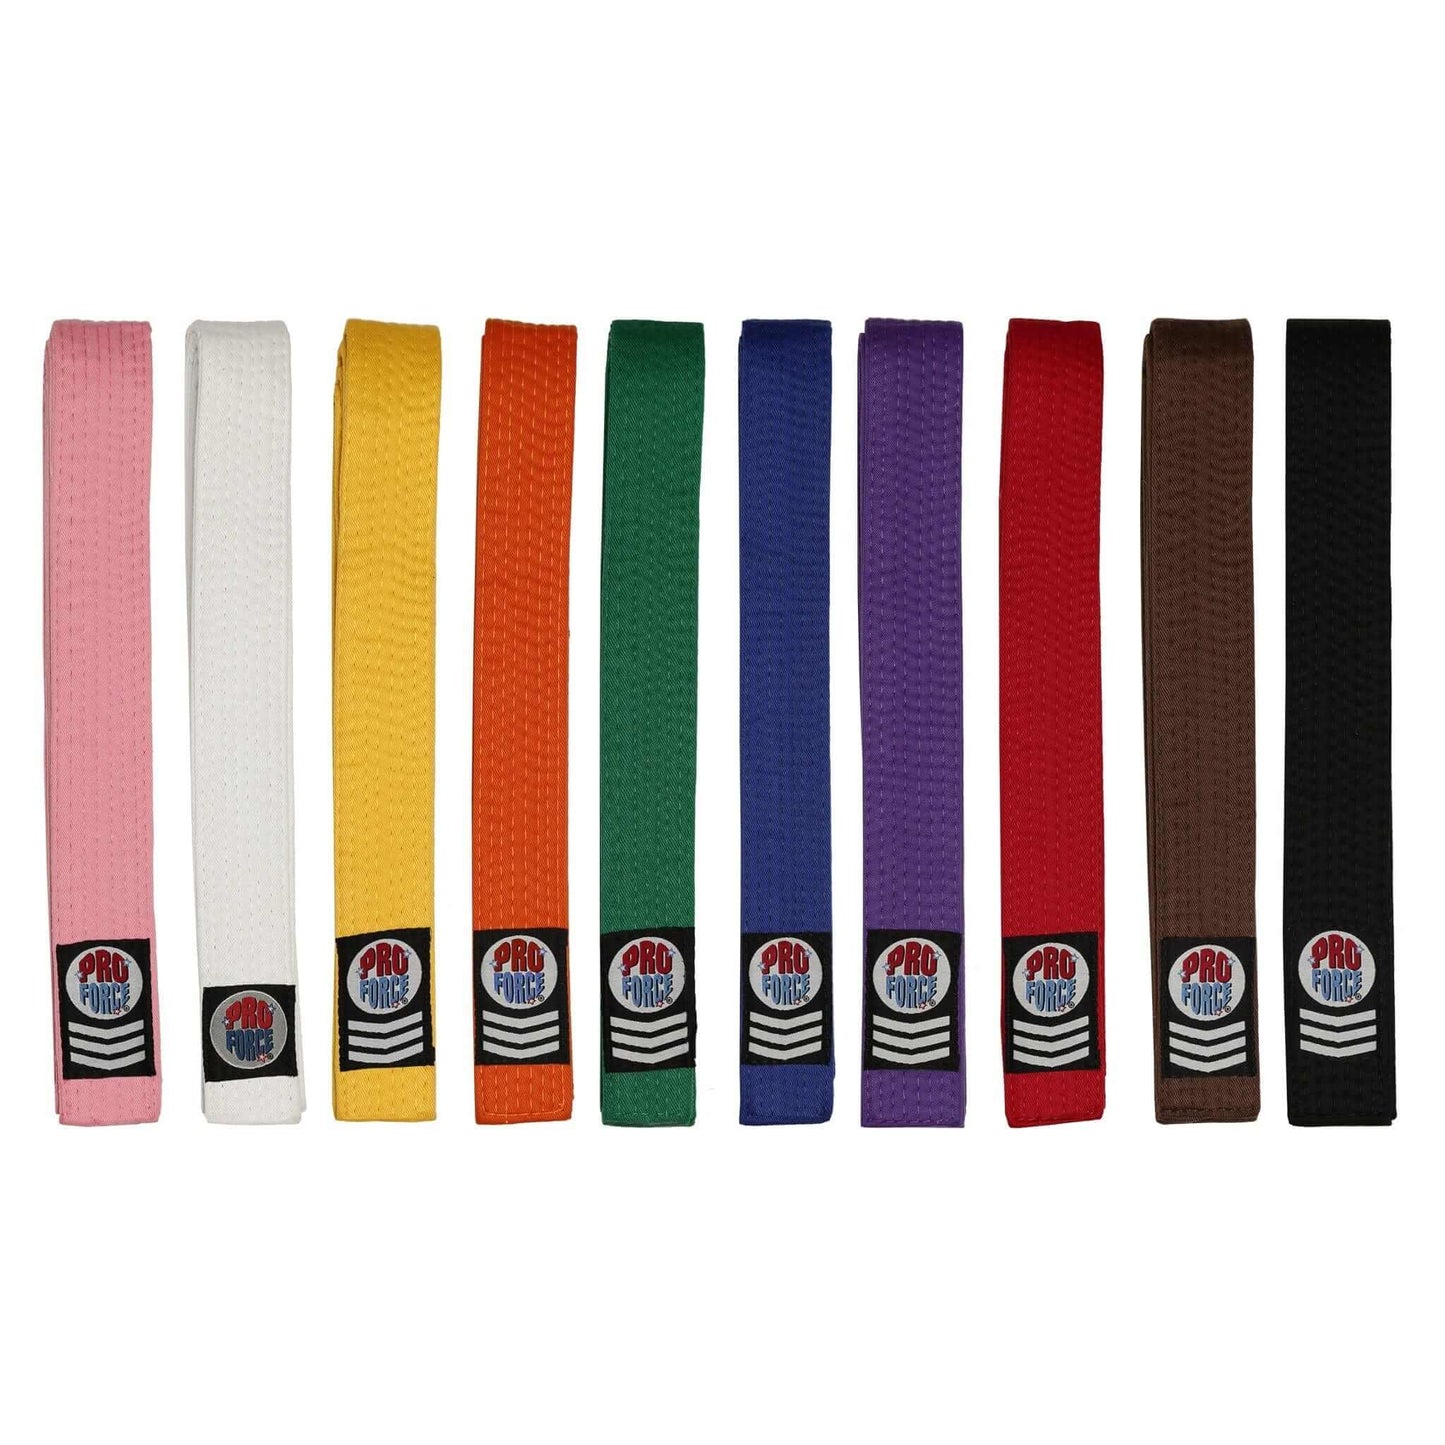 EclipseMartialArtsSupplies sporting goods ProForce Gladiator 1.75 inch wide Double Wrap Karate Belts